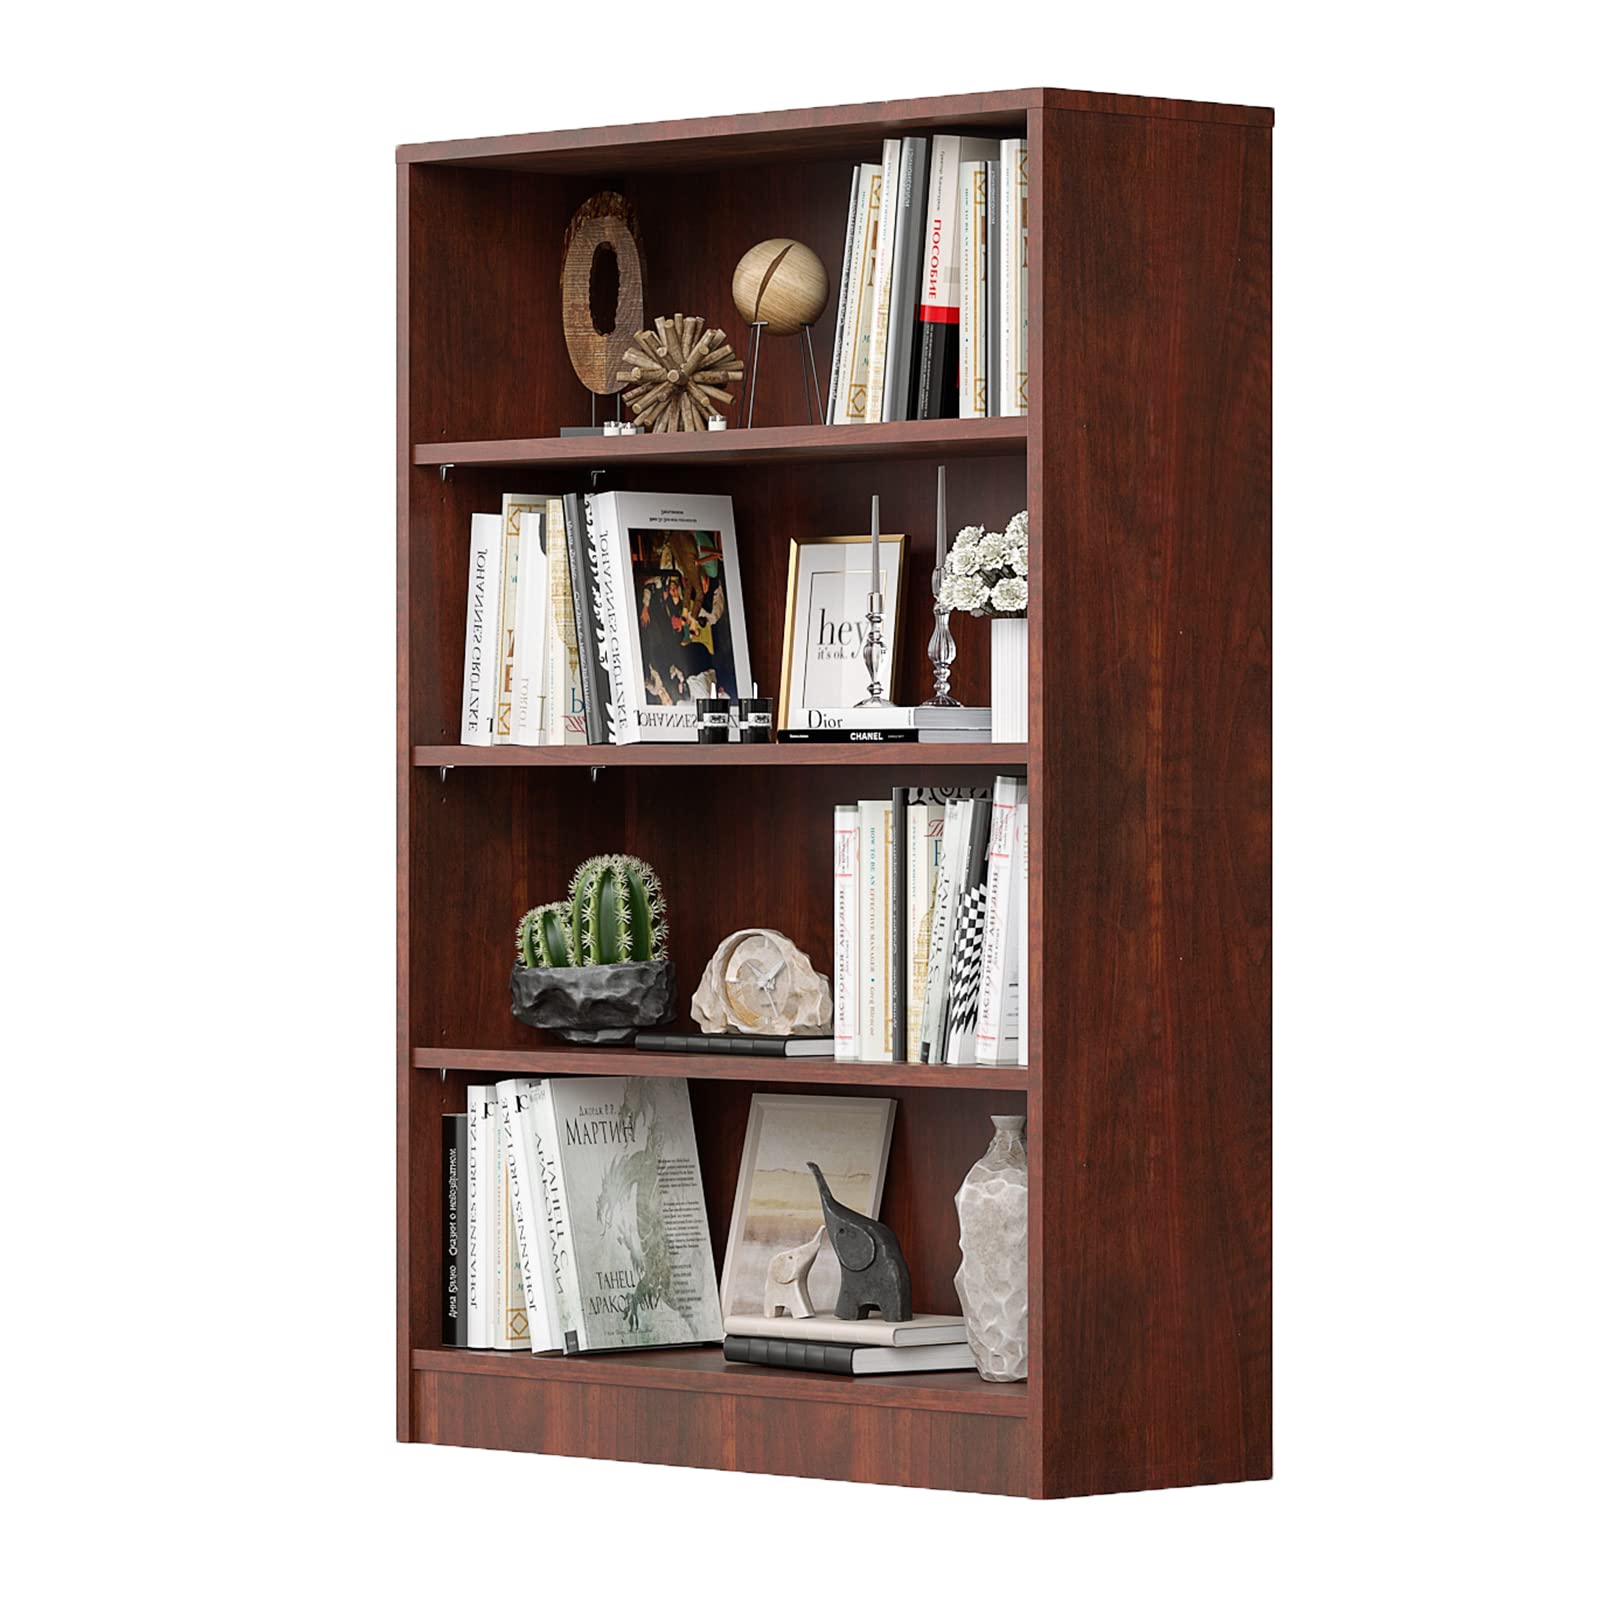 Sunon Wood Bookcase 4-Shelf, Freestanding Display Wooden Bookshelf for Home Office School (11.6" D*33" W*48" H, Cherry)